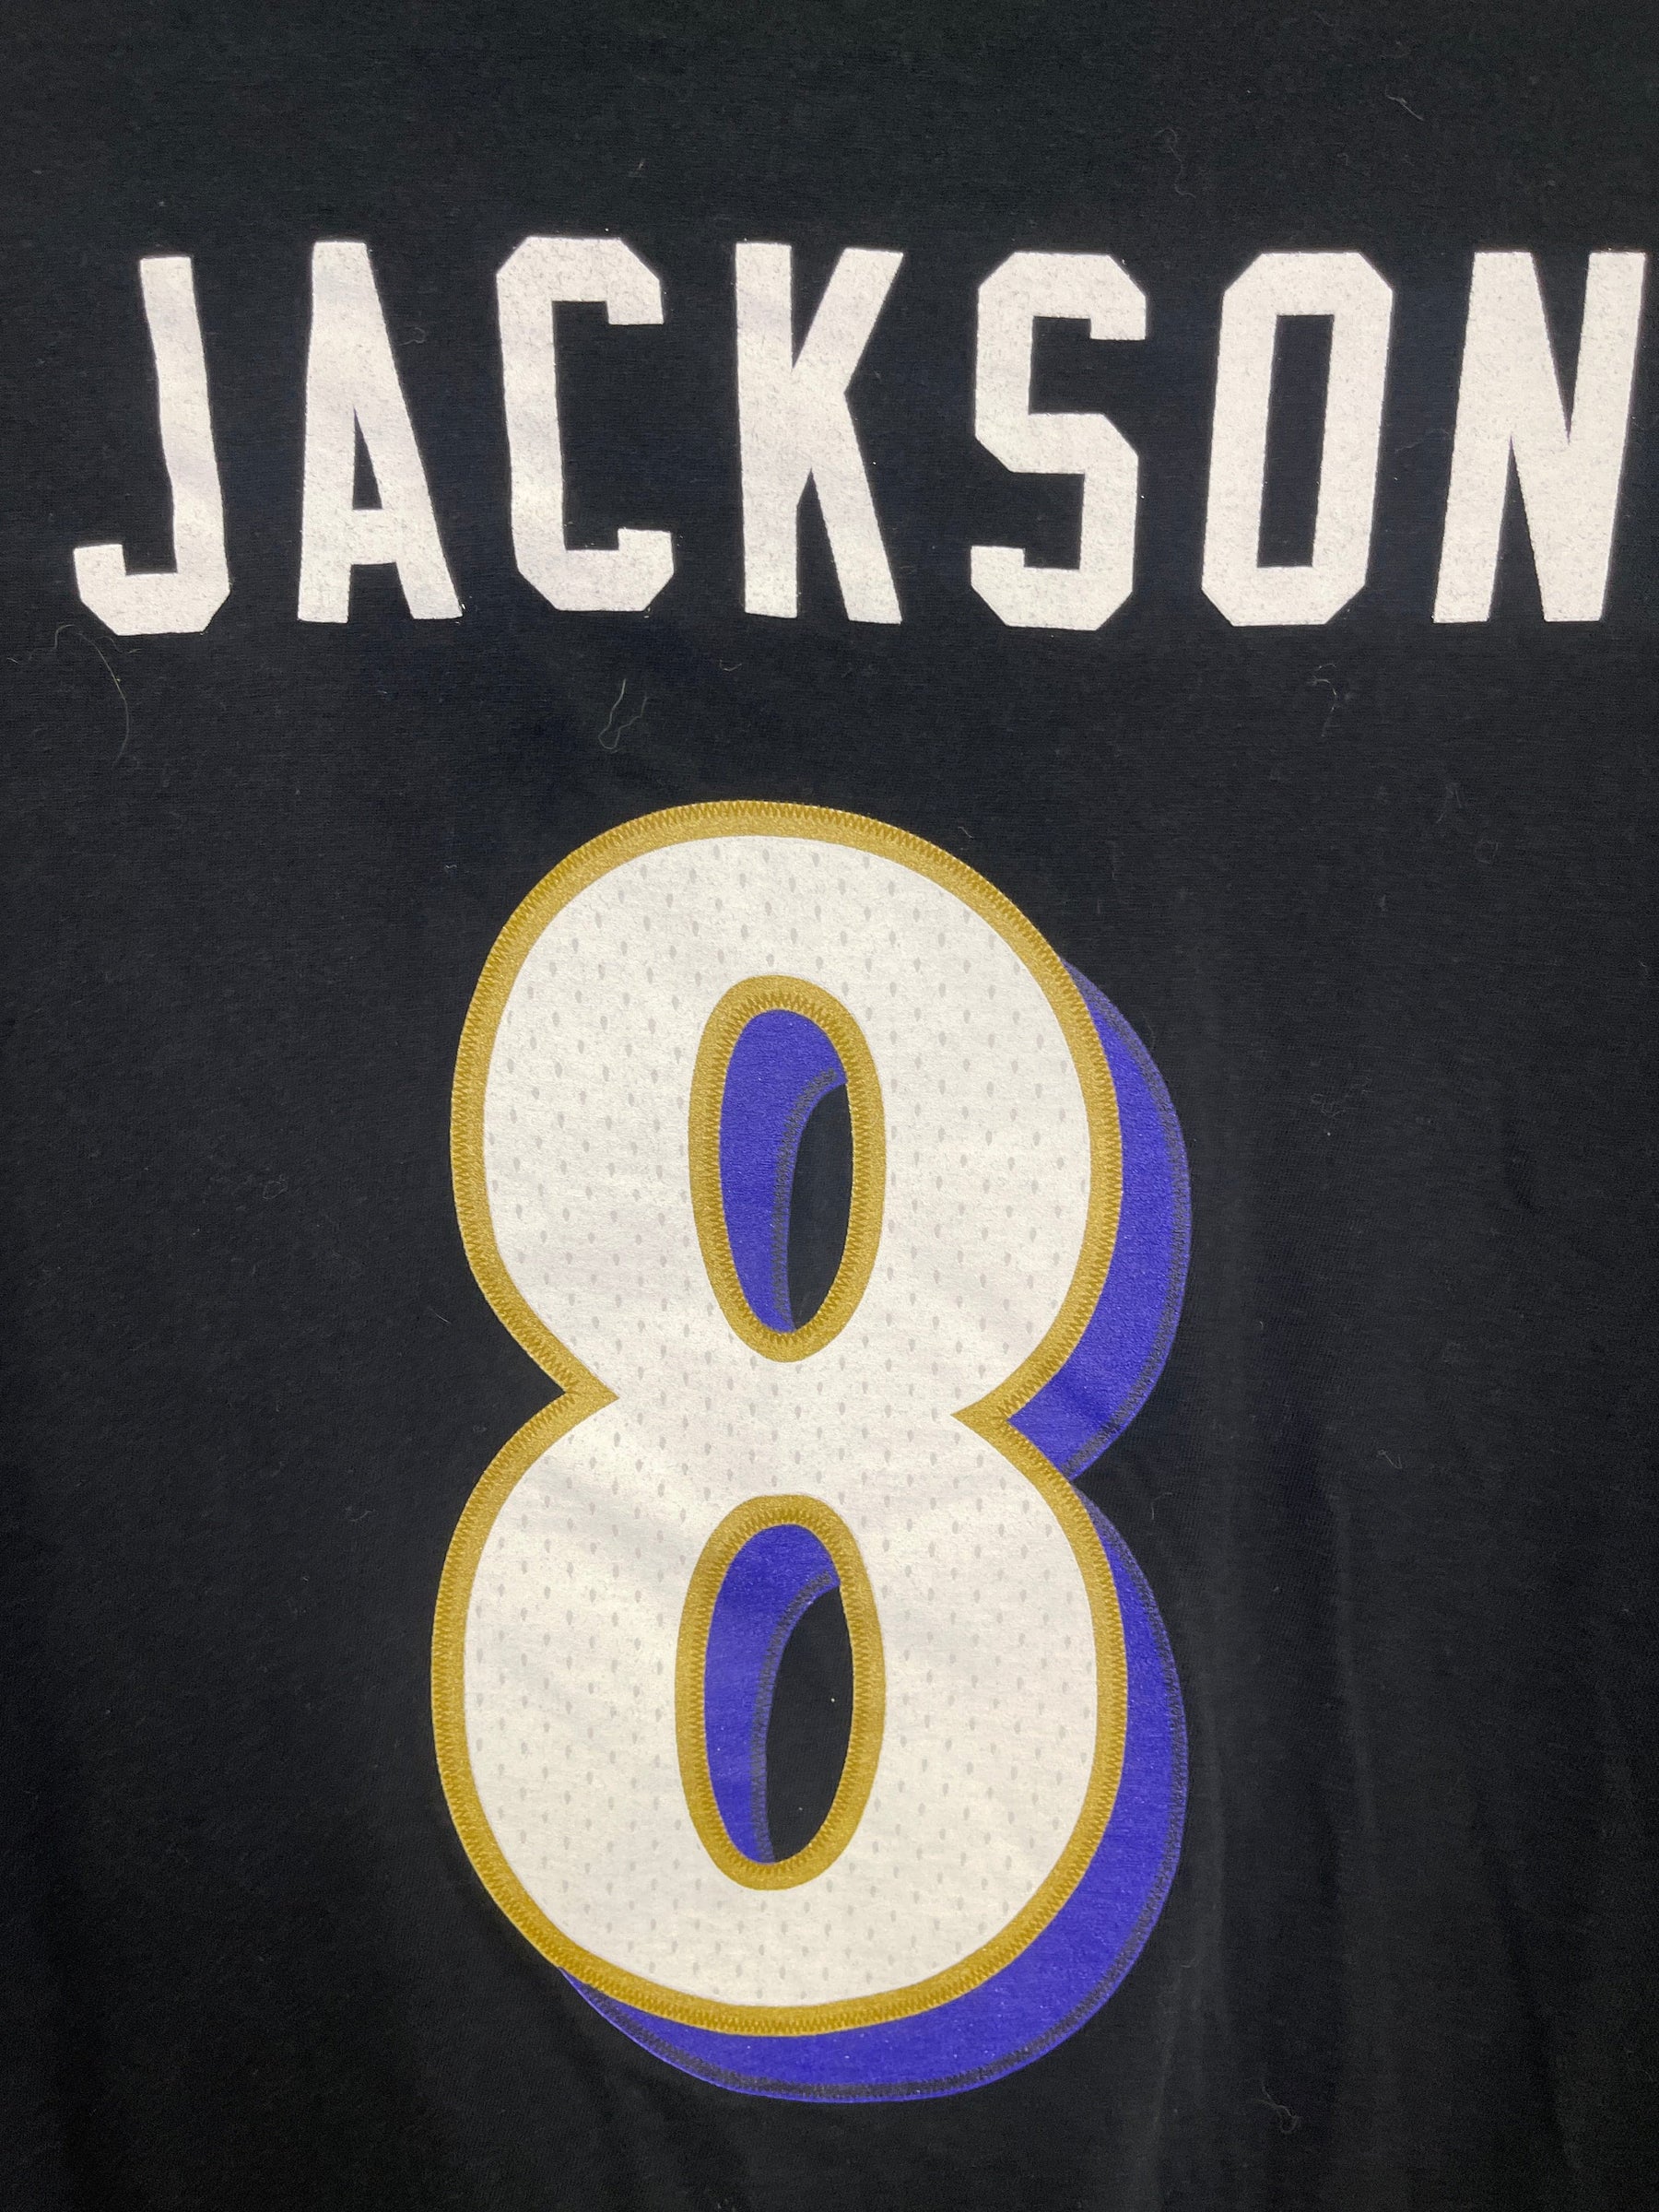 NFL Baltimore Ravens Fanatics Lamar Jackson #8 Playoffs T-Shirt Men's 2X-Large